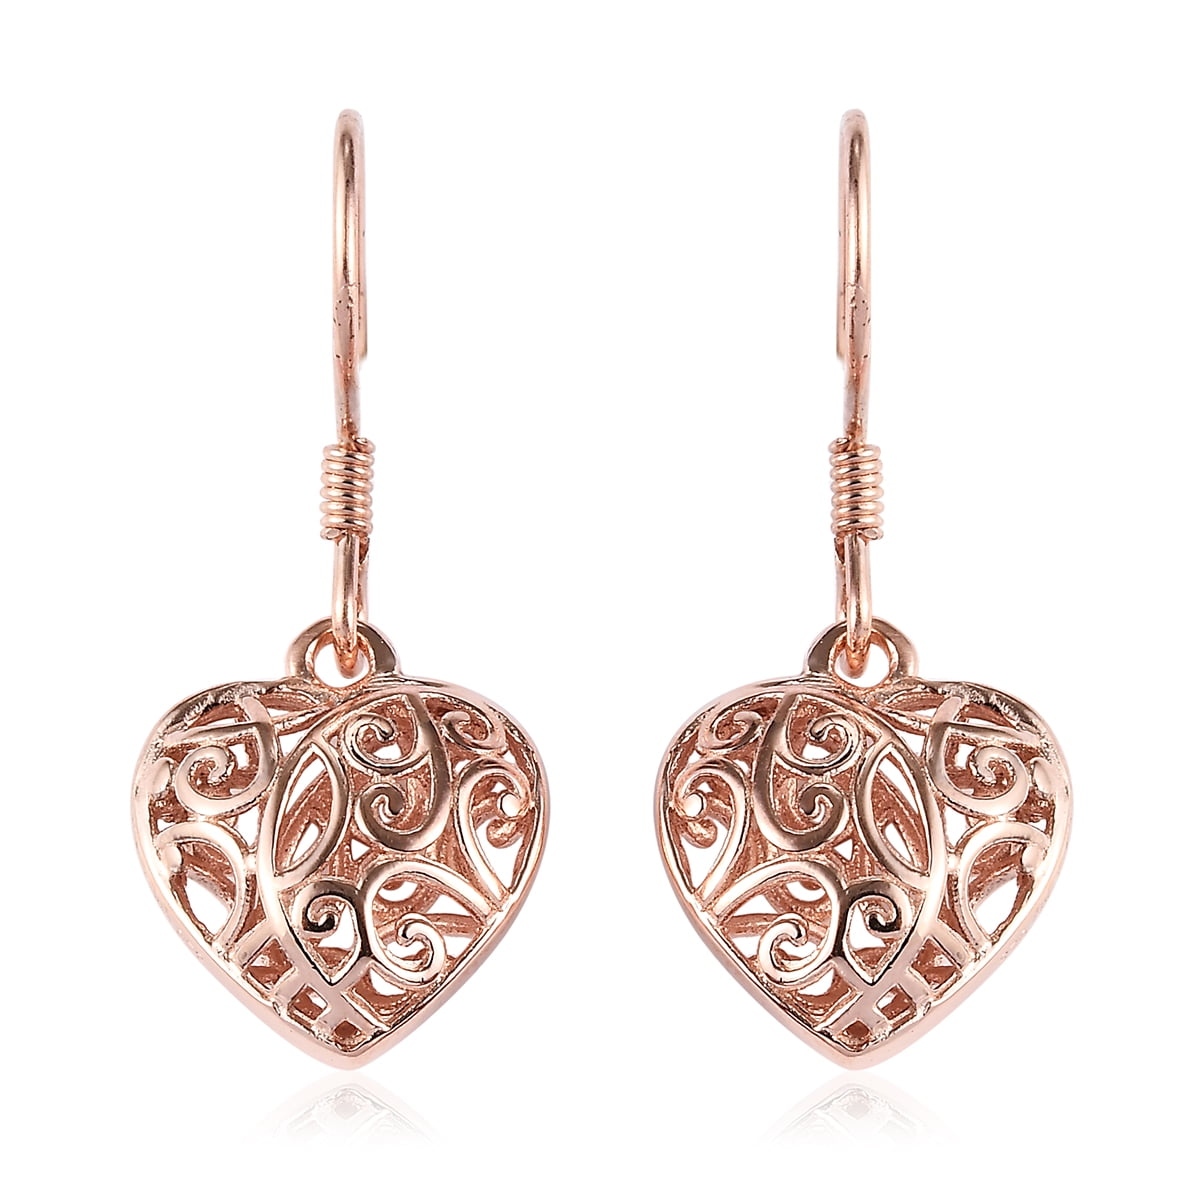 Shop LC - 925 Sterling Silver 14K Rose Gold Plated Silver Heart Dangle Drop Earrings for Women Jewelry